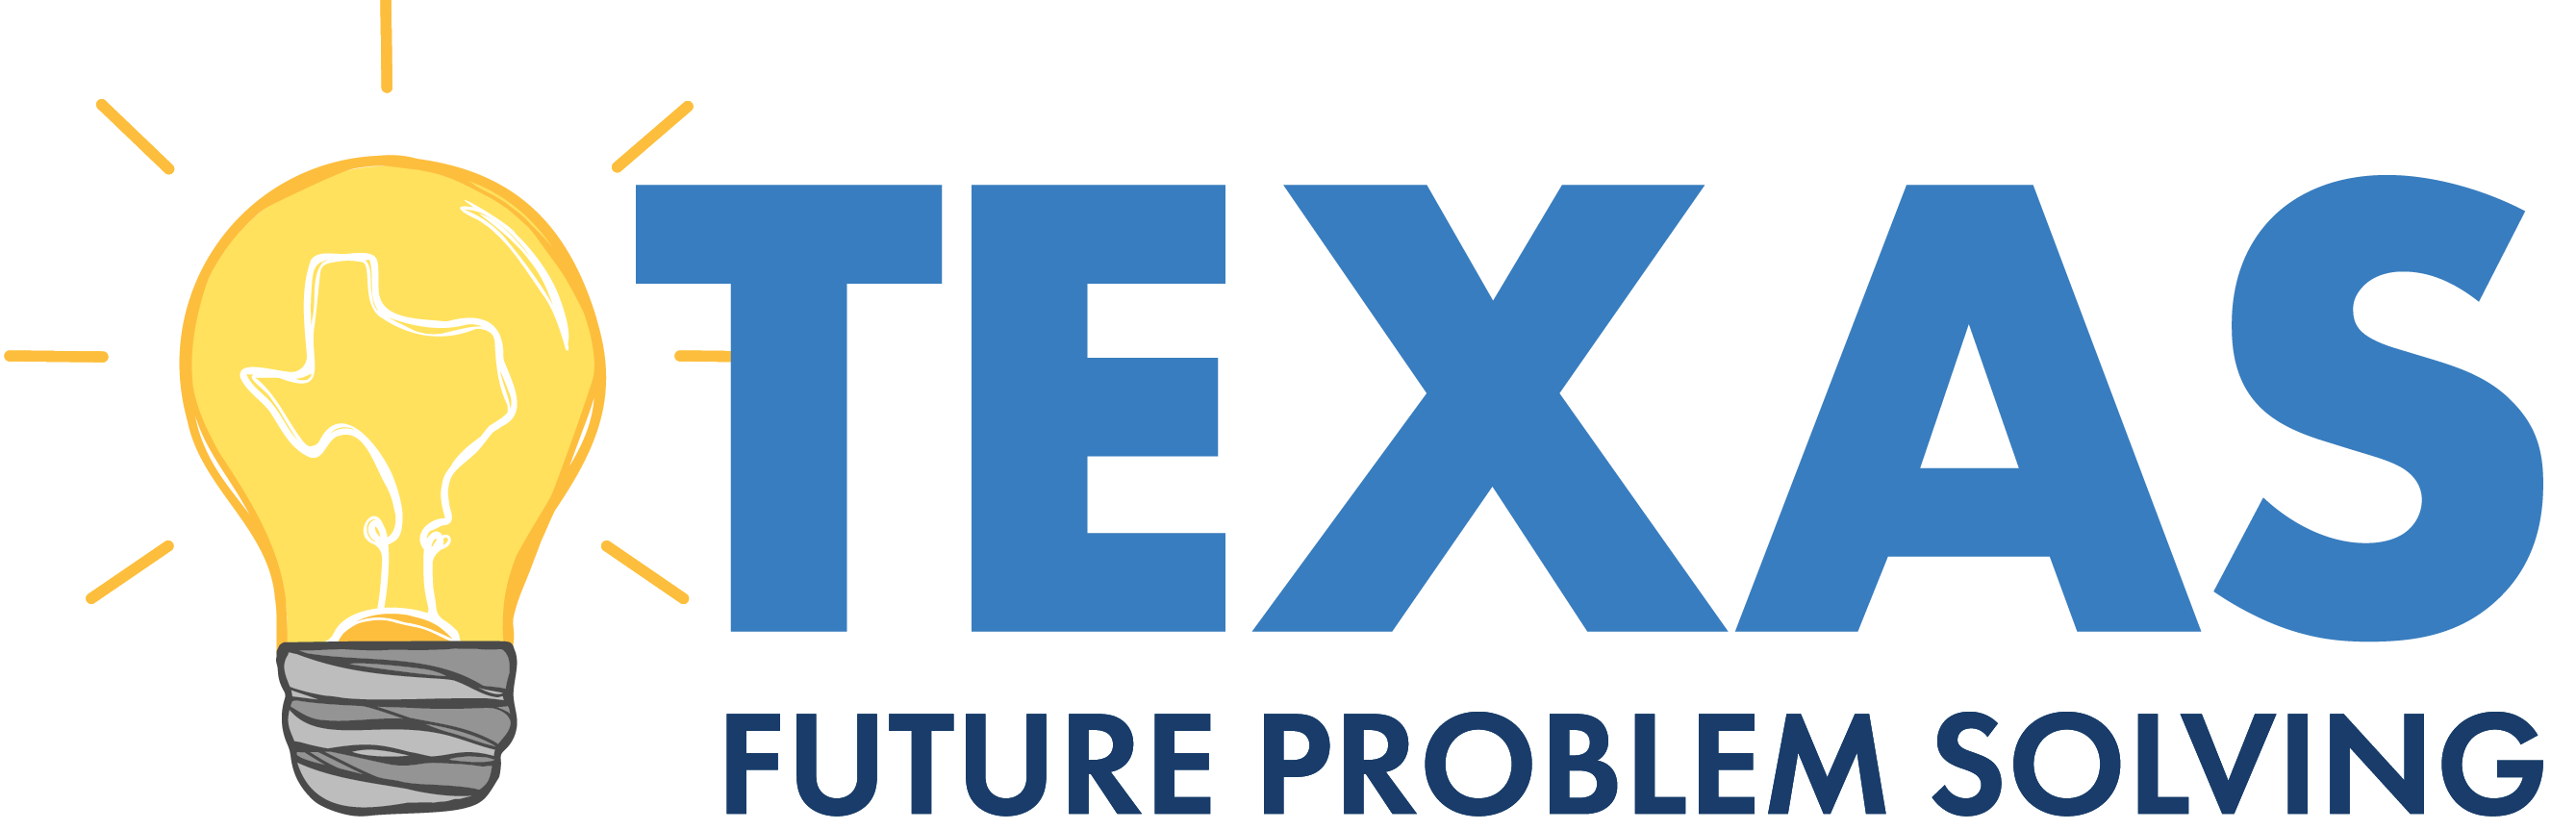 texas future problem solving program